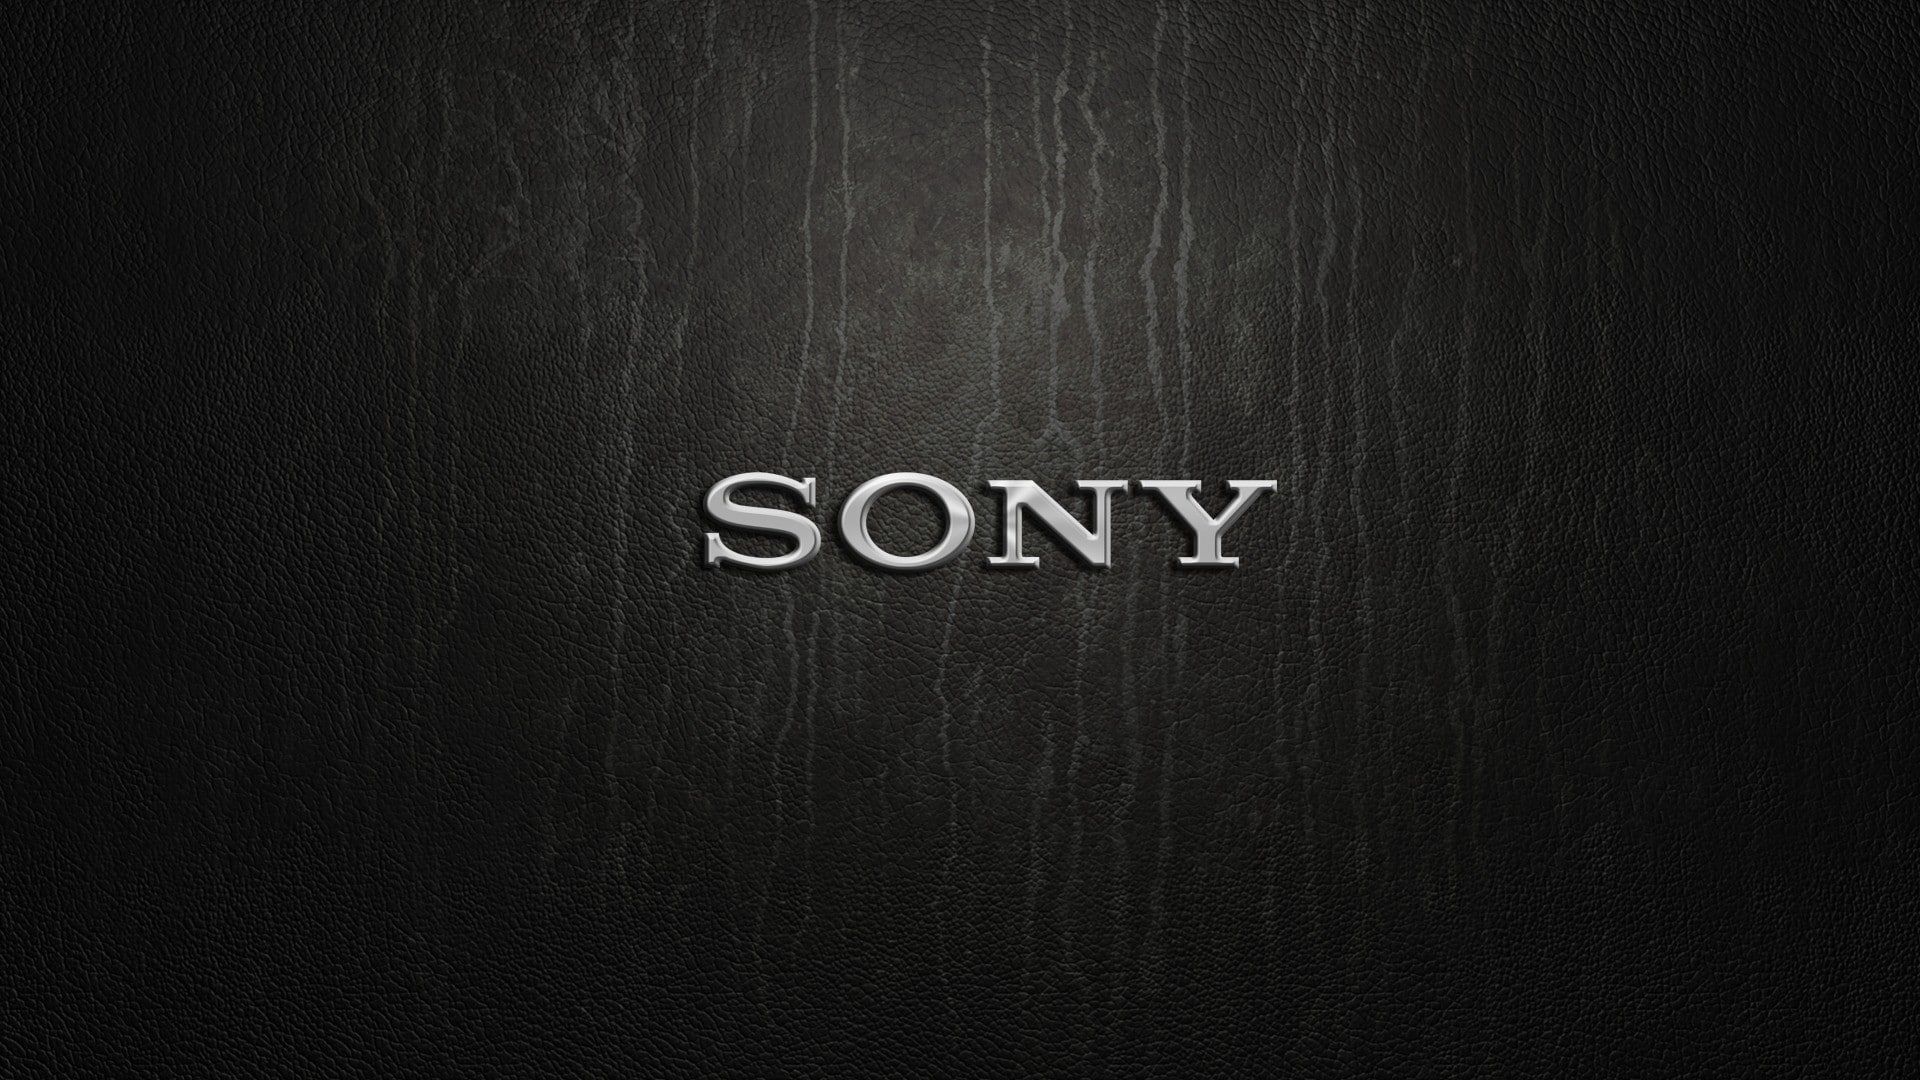 Sony logo #Sony #silver #logo P #wallpaper #hdwallpaper #desktop. Logo wallpaper hd, Sony phone, Sony mobile phones